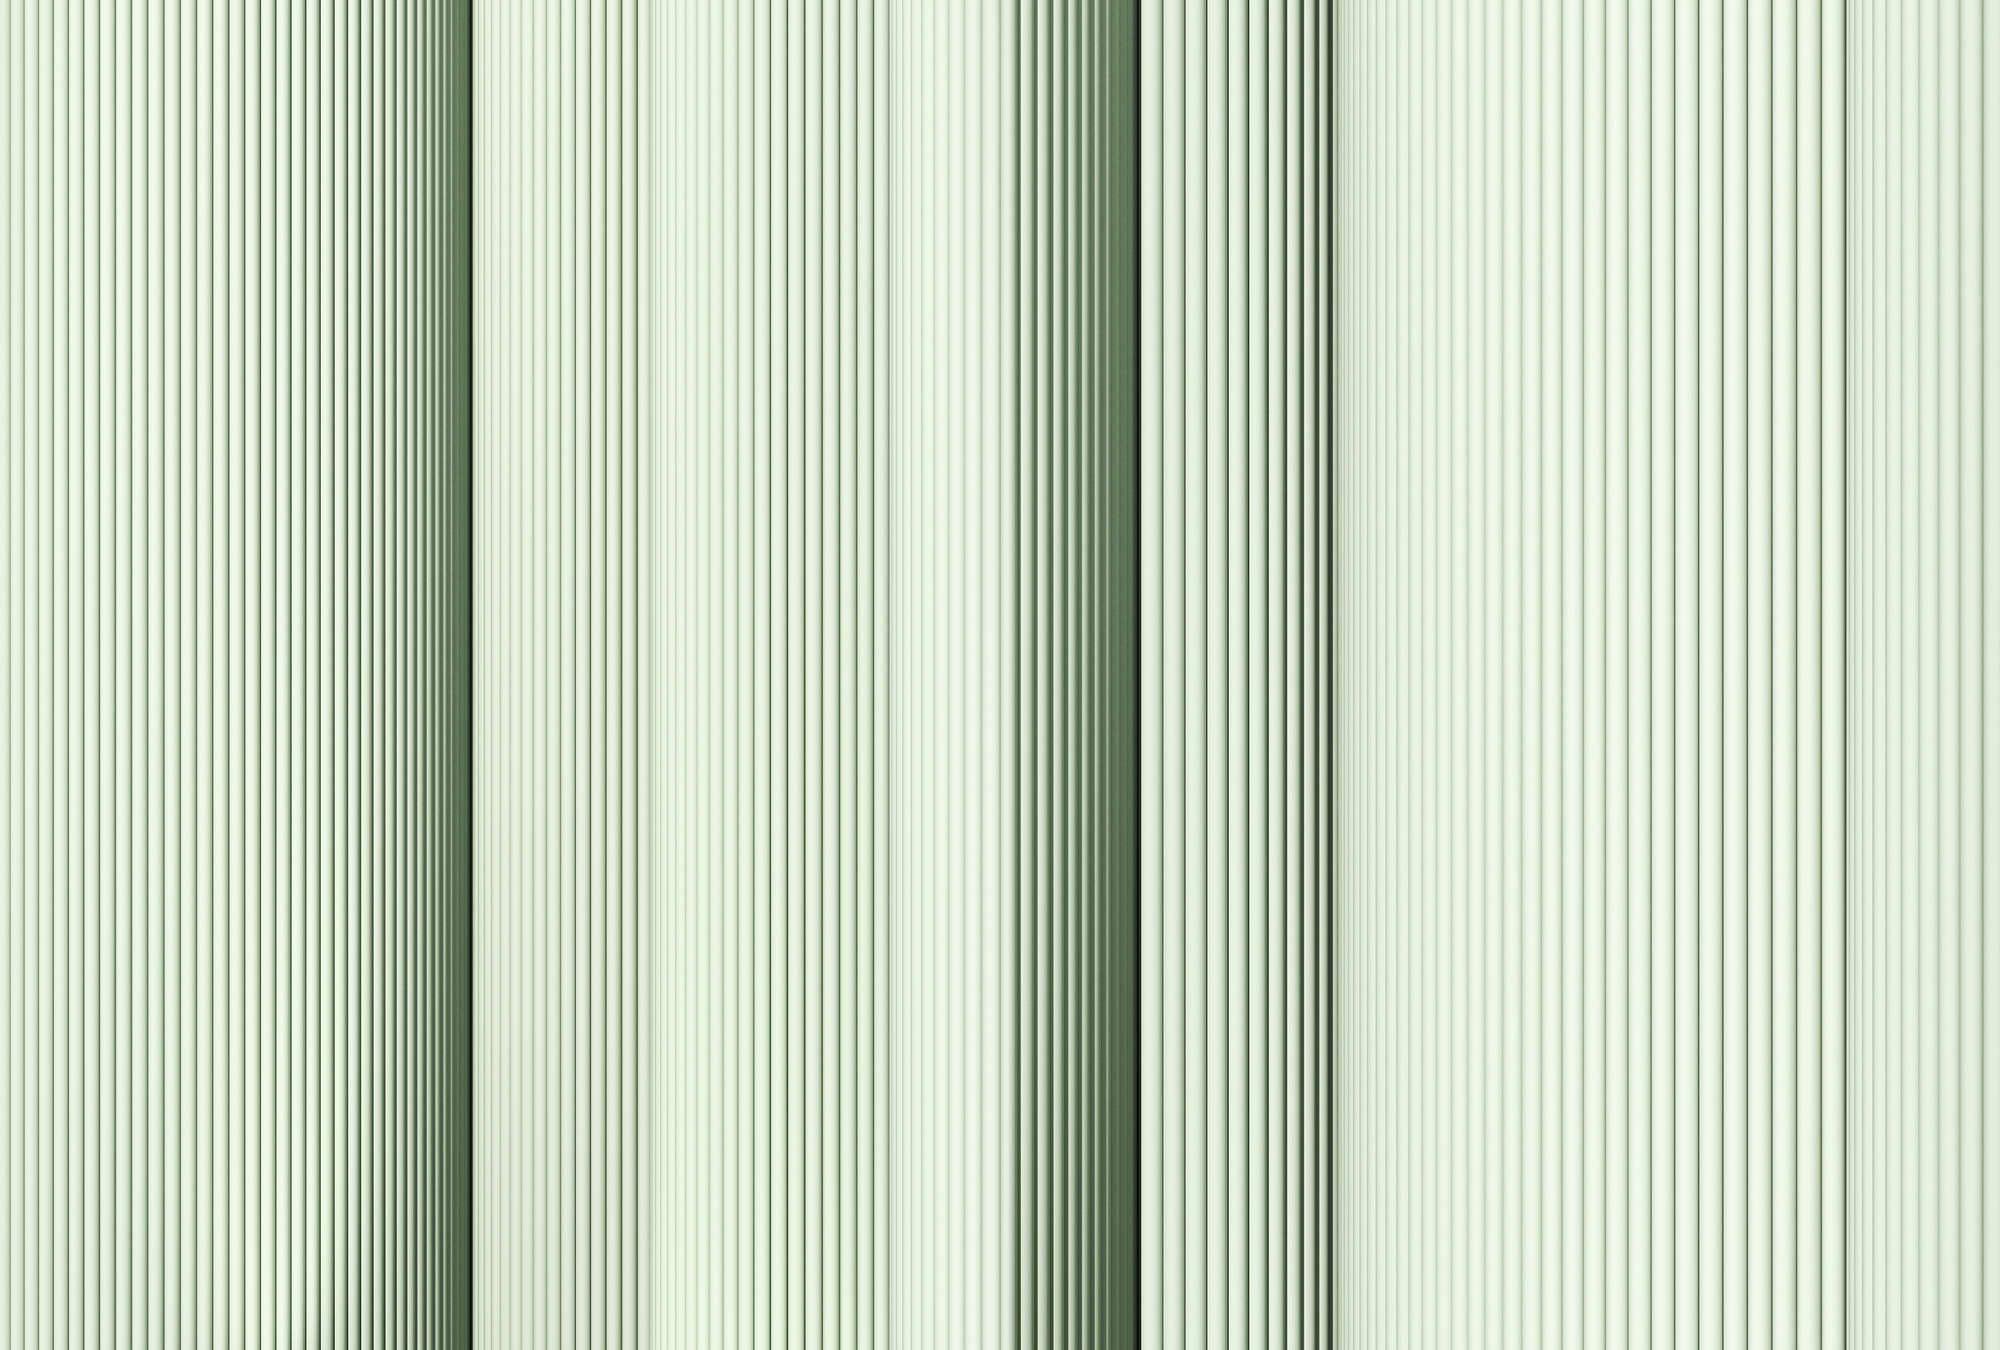             Magic Wall 2 - Groene strepen fotobehang met 3D illusie effect
        